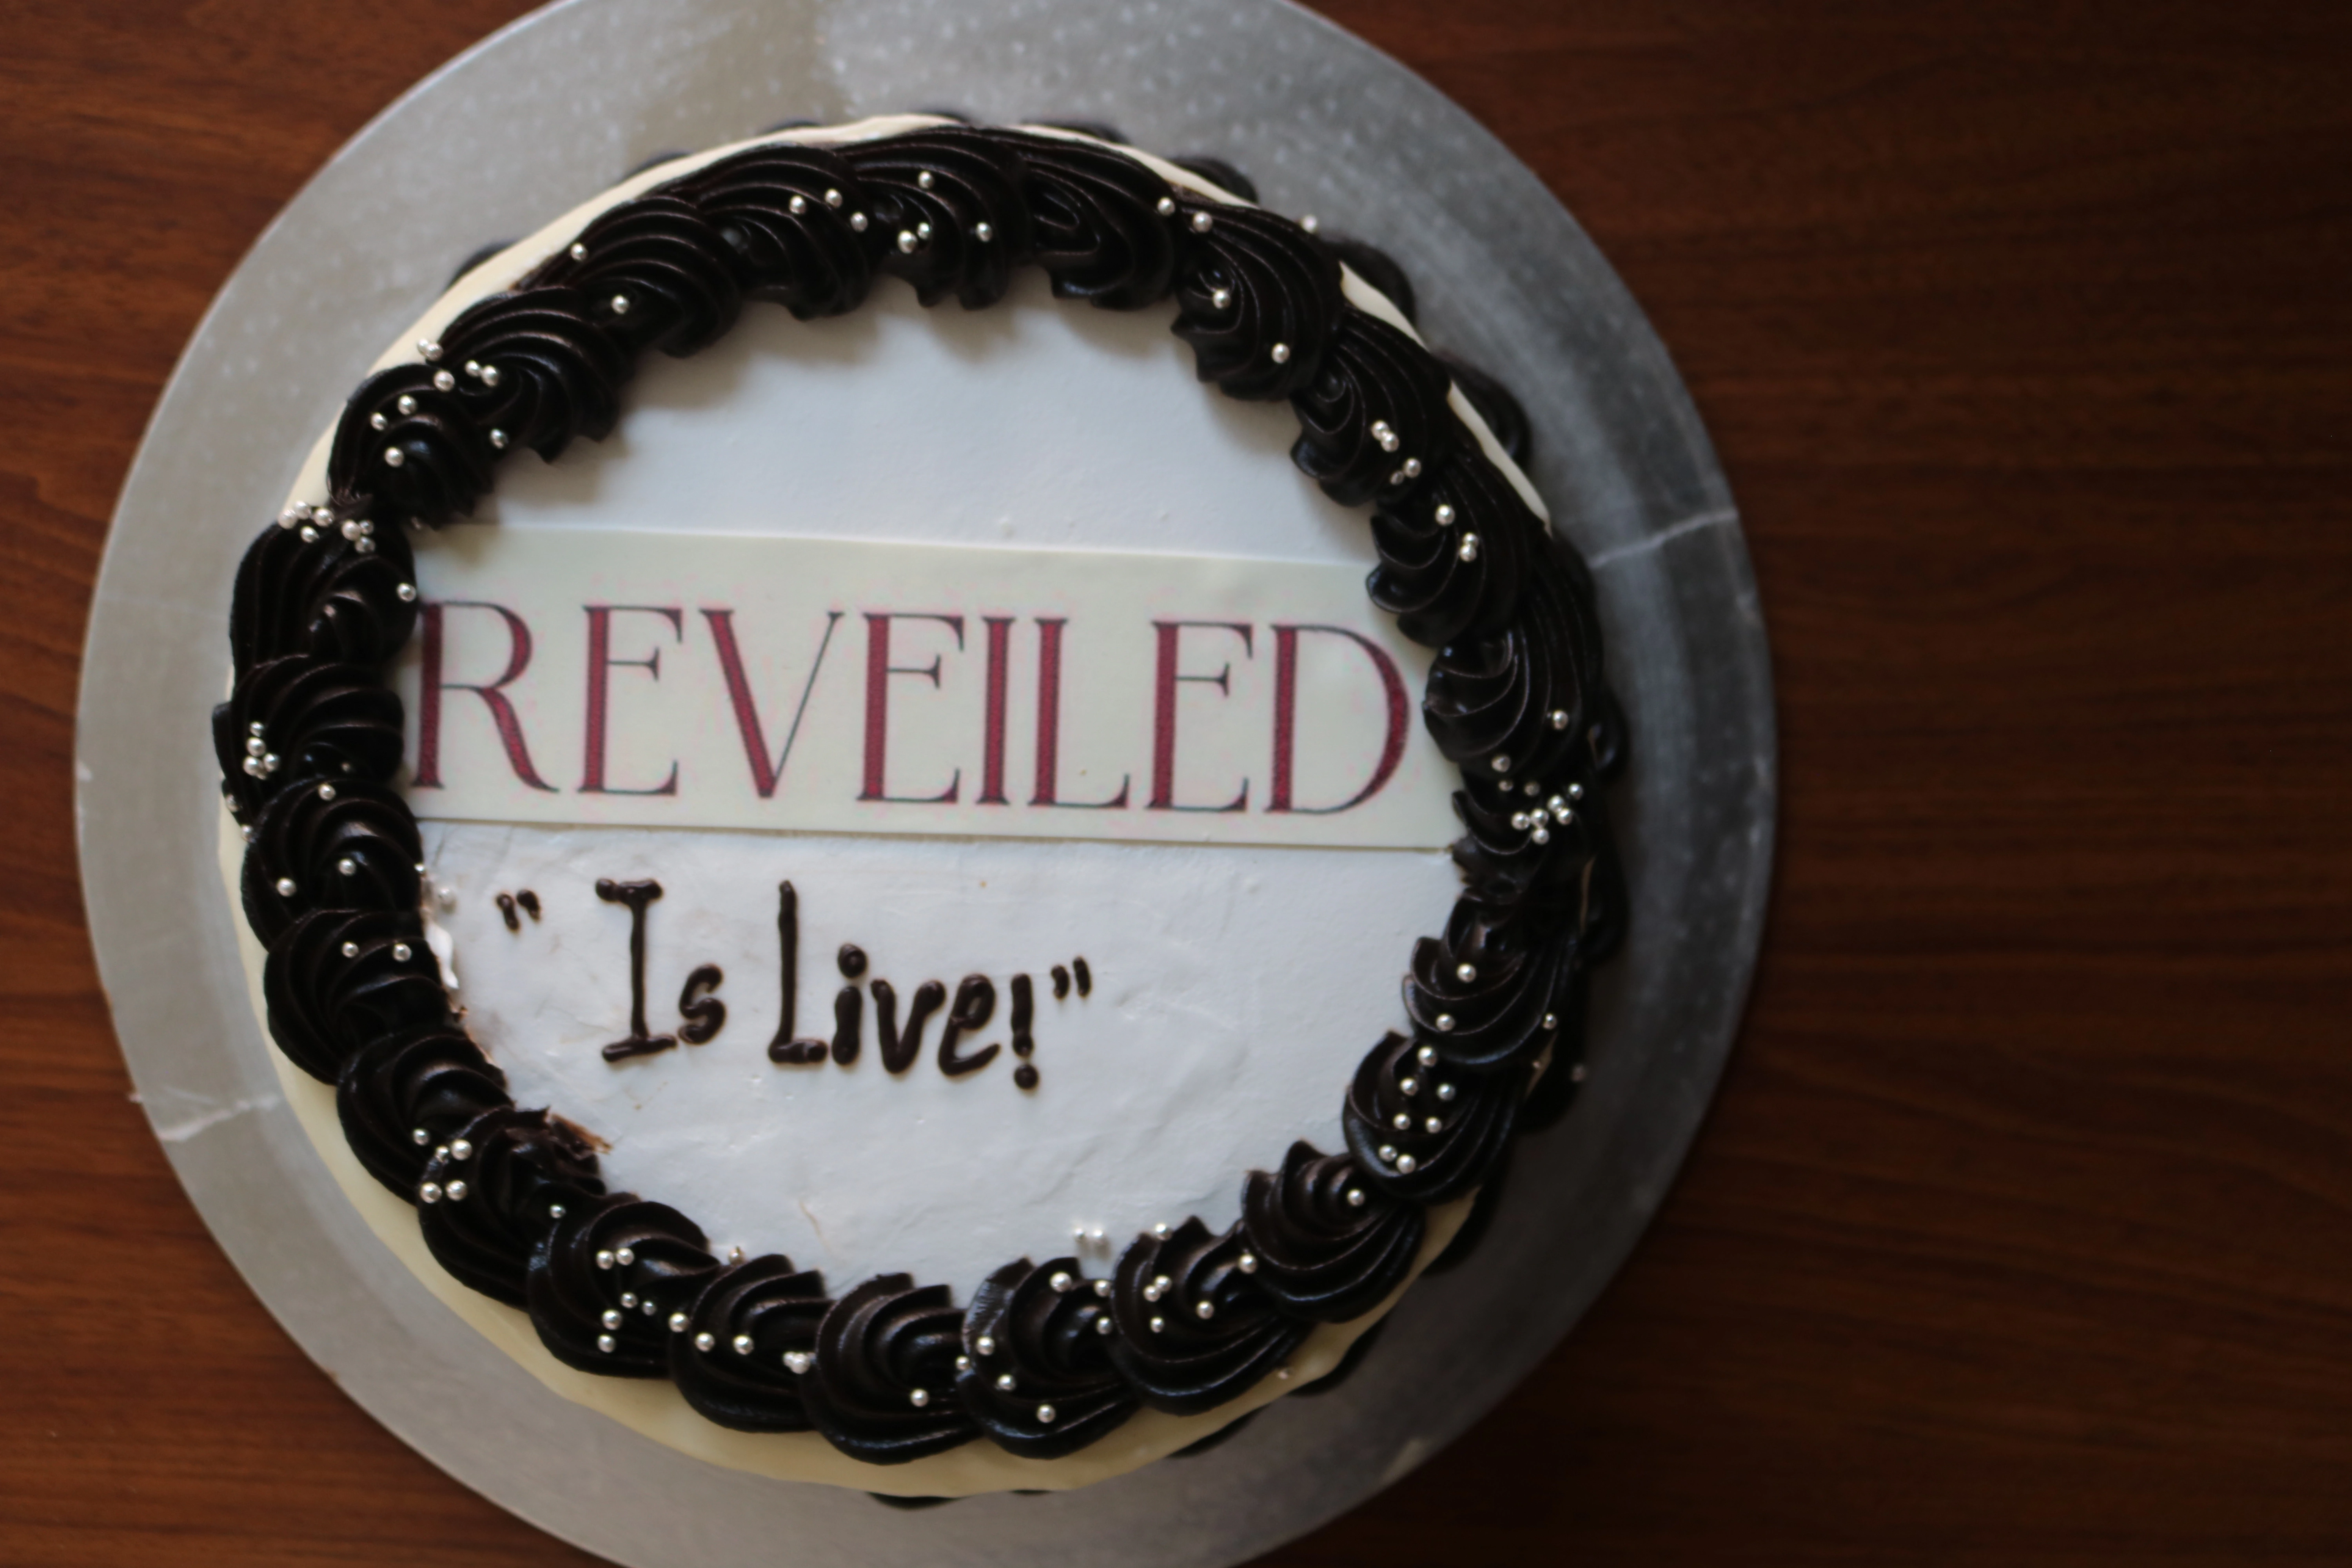 Reveiled is live celebration